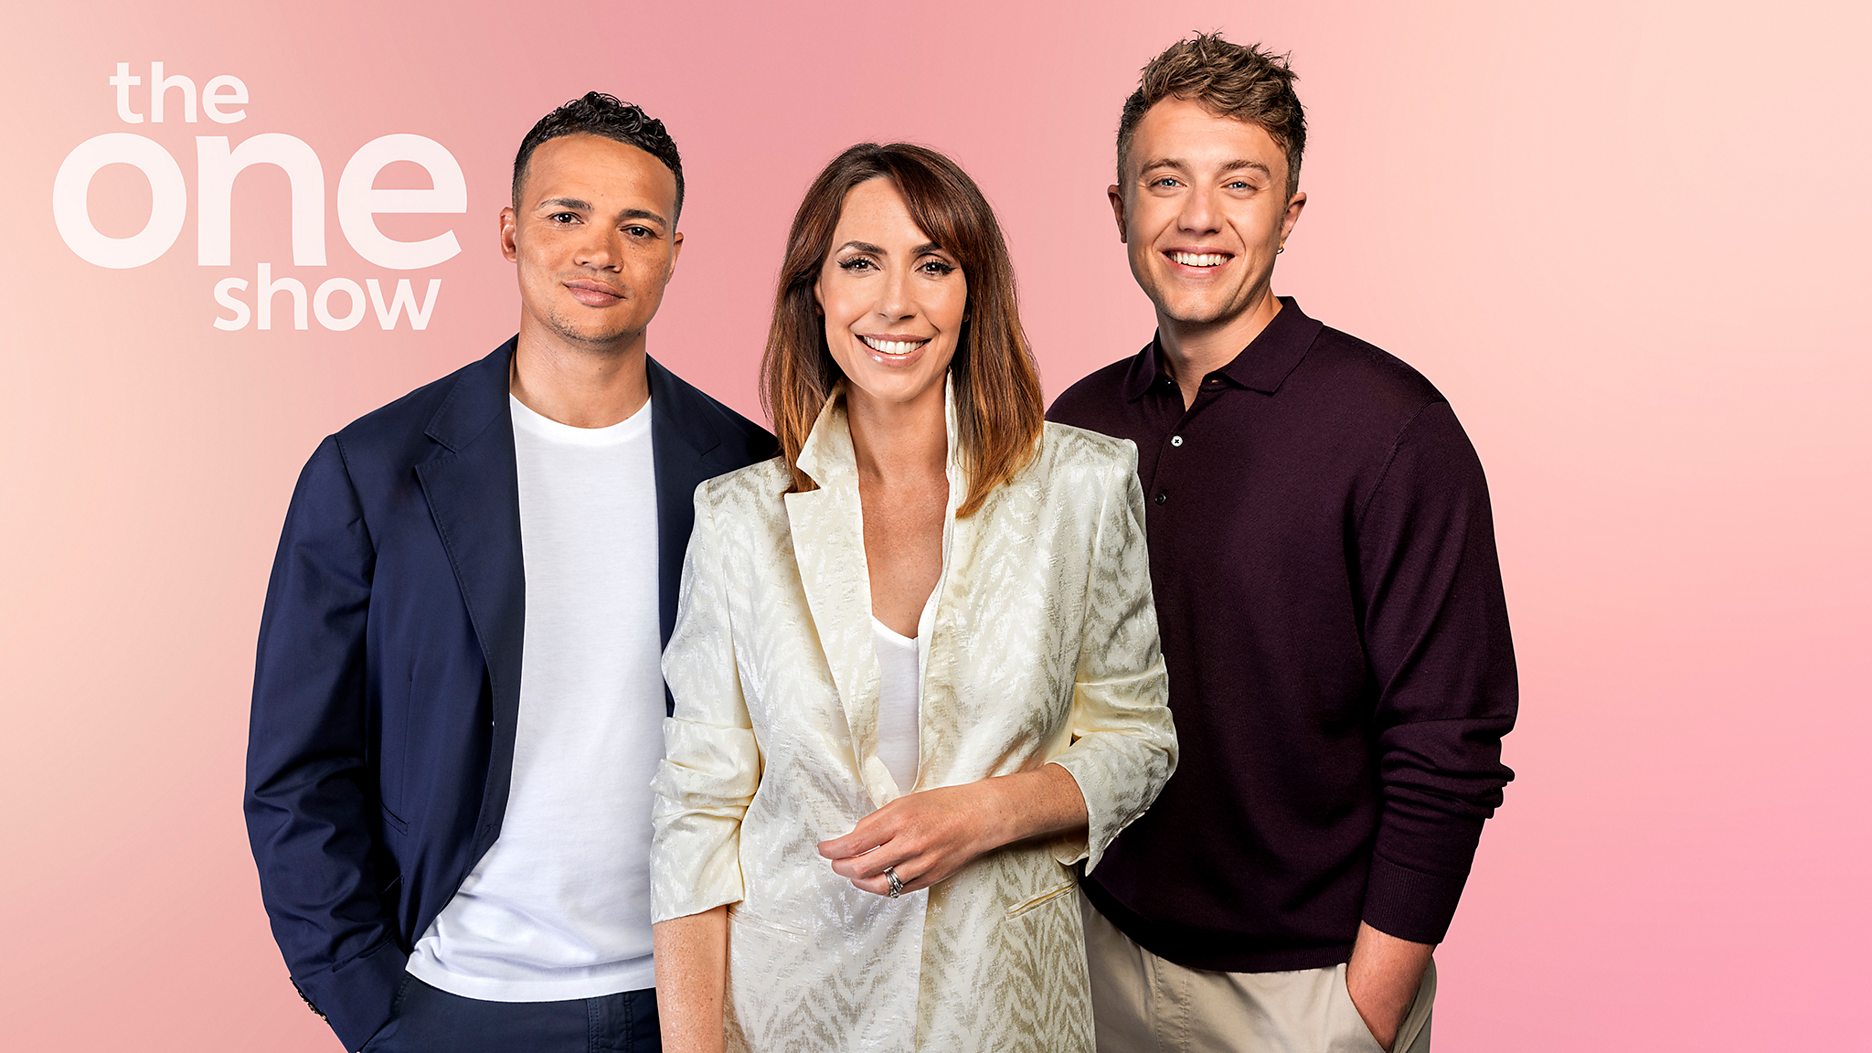 Roman Kemp joins BBC One’s The One Show as Alex Jones’s regular co-host alongside Jermaine Jenas